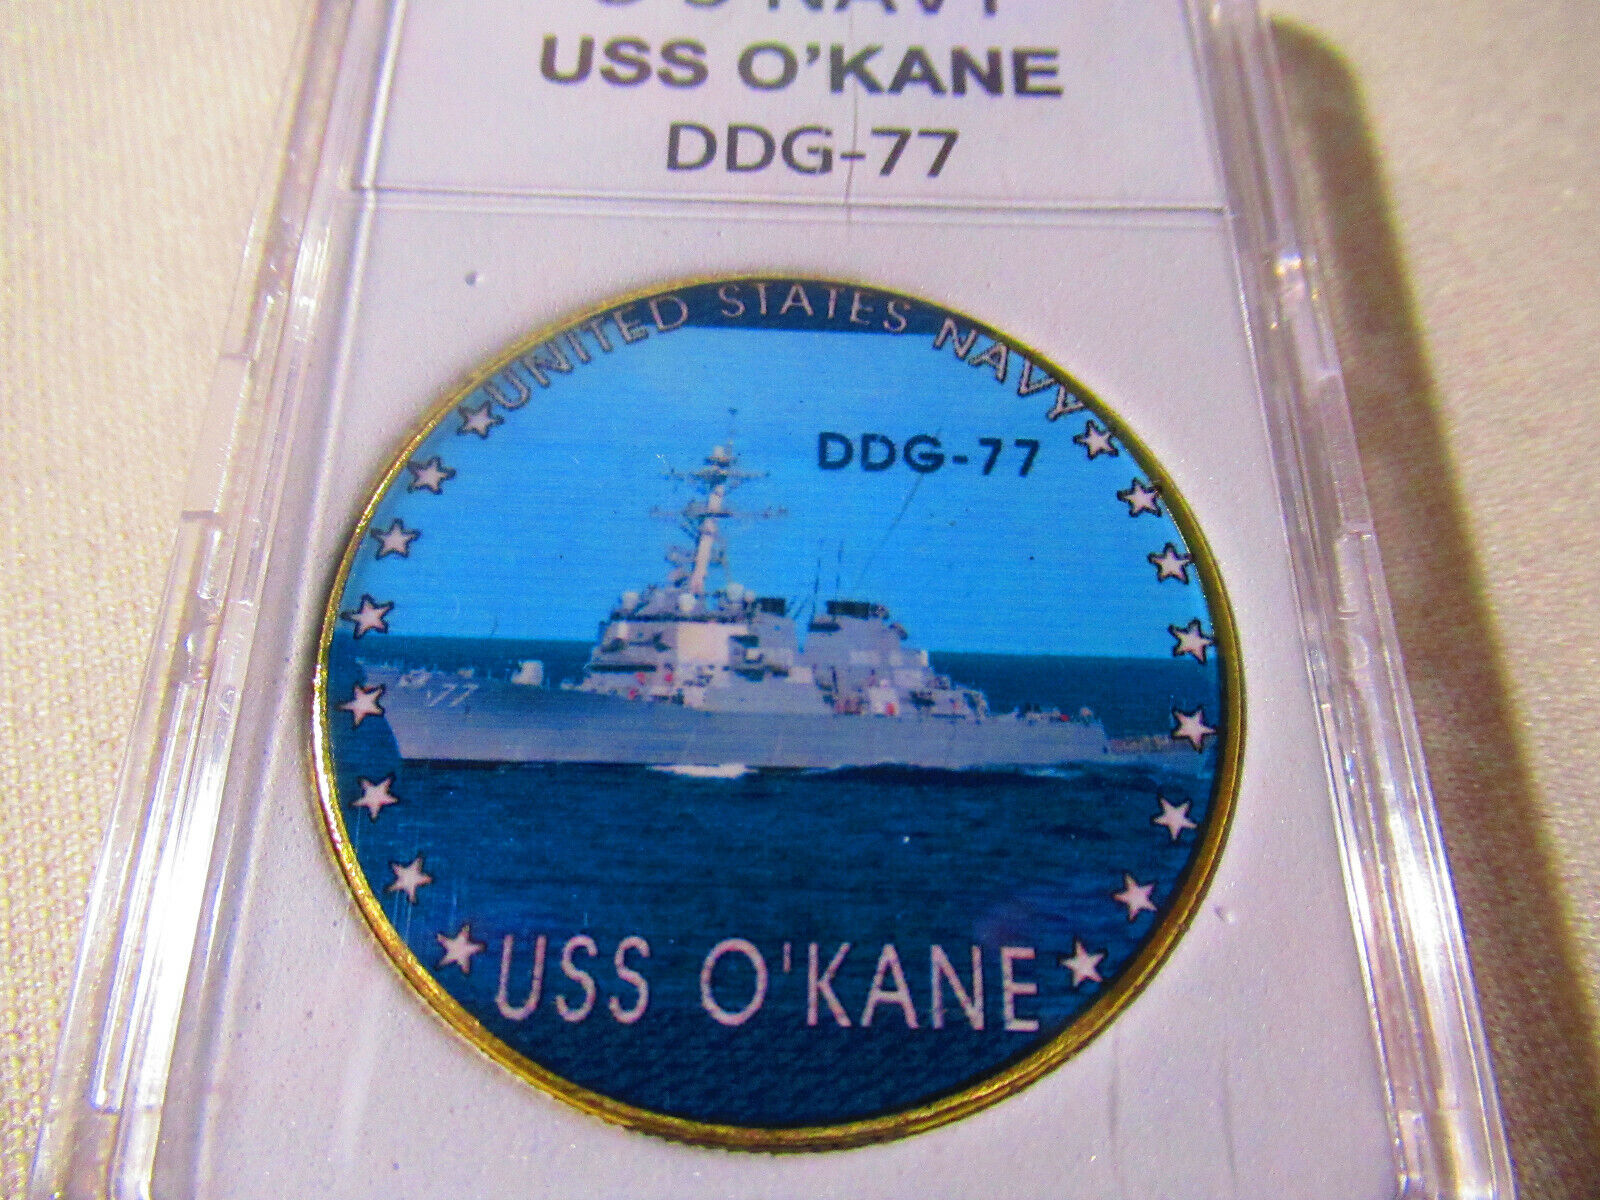 US NAVY - USS O'KANE (DDG-77) Challenge Coin